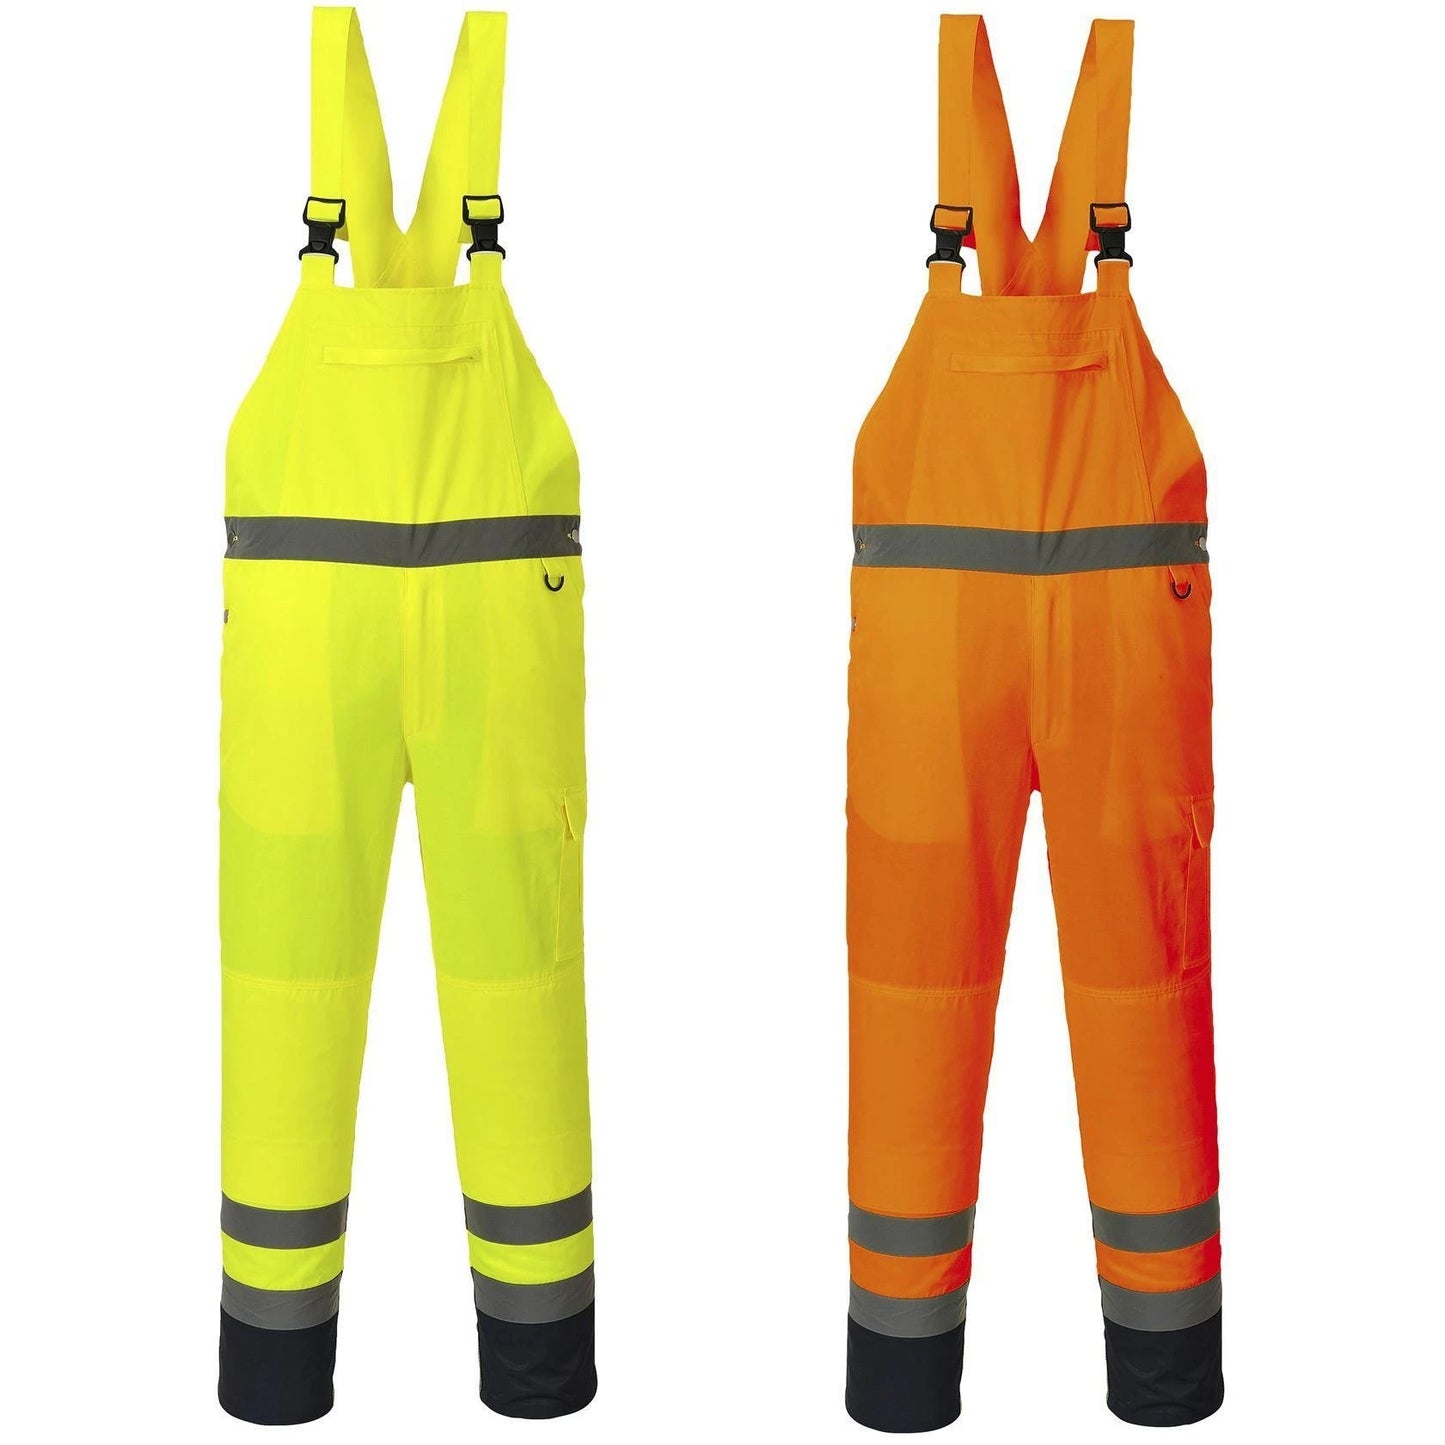 Portwest PJ52 Orange Yellow Hi-Vis Contrast Bib & Brace Hiviz Visbility Coverall